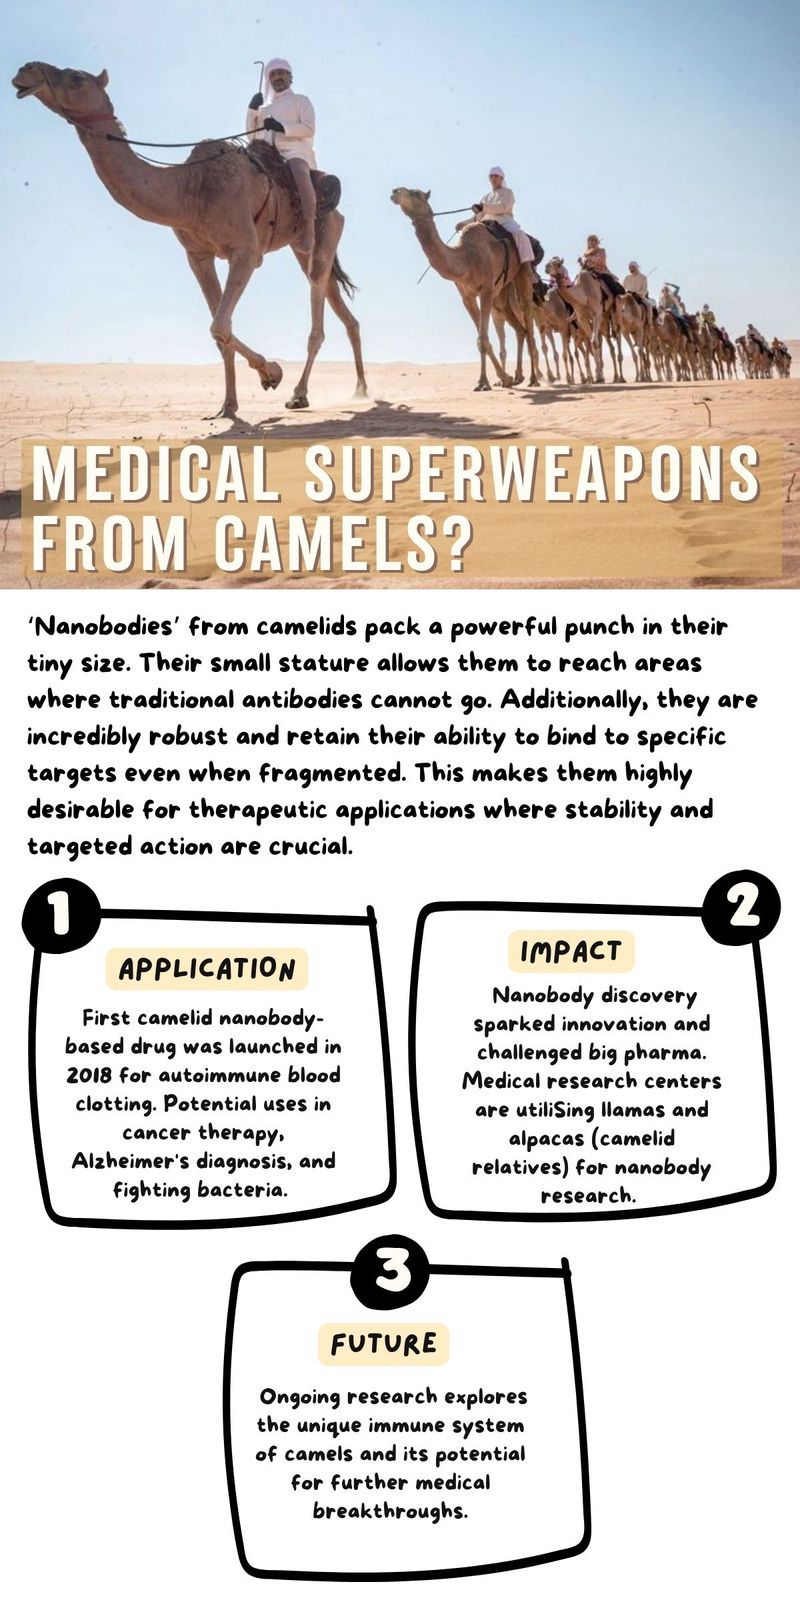 Camel nanobodies medical superweapons